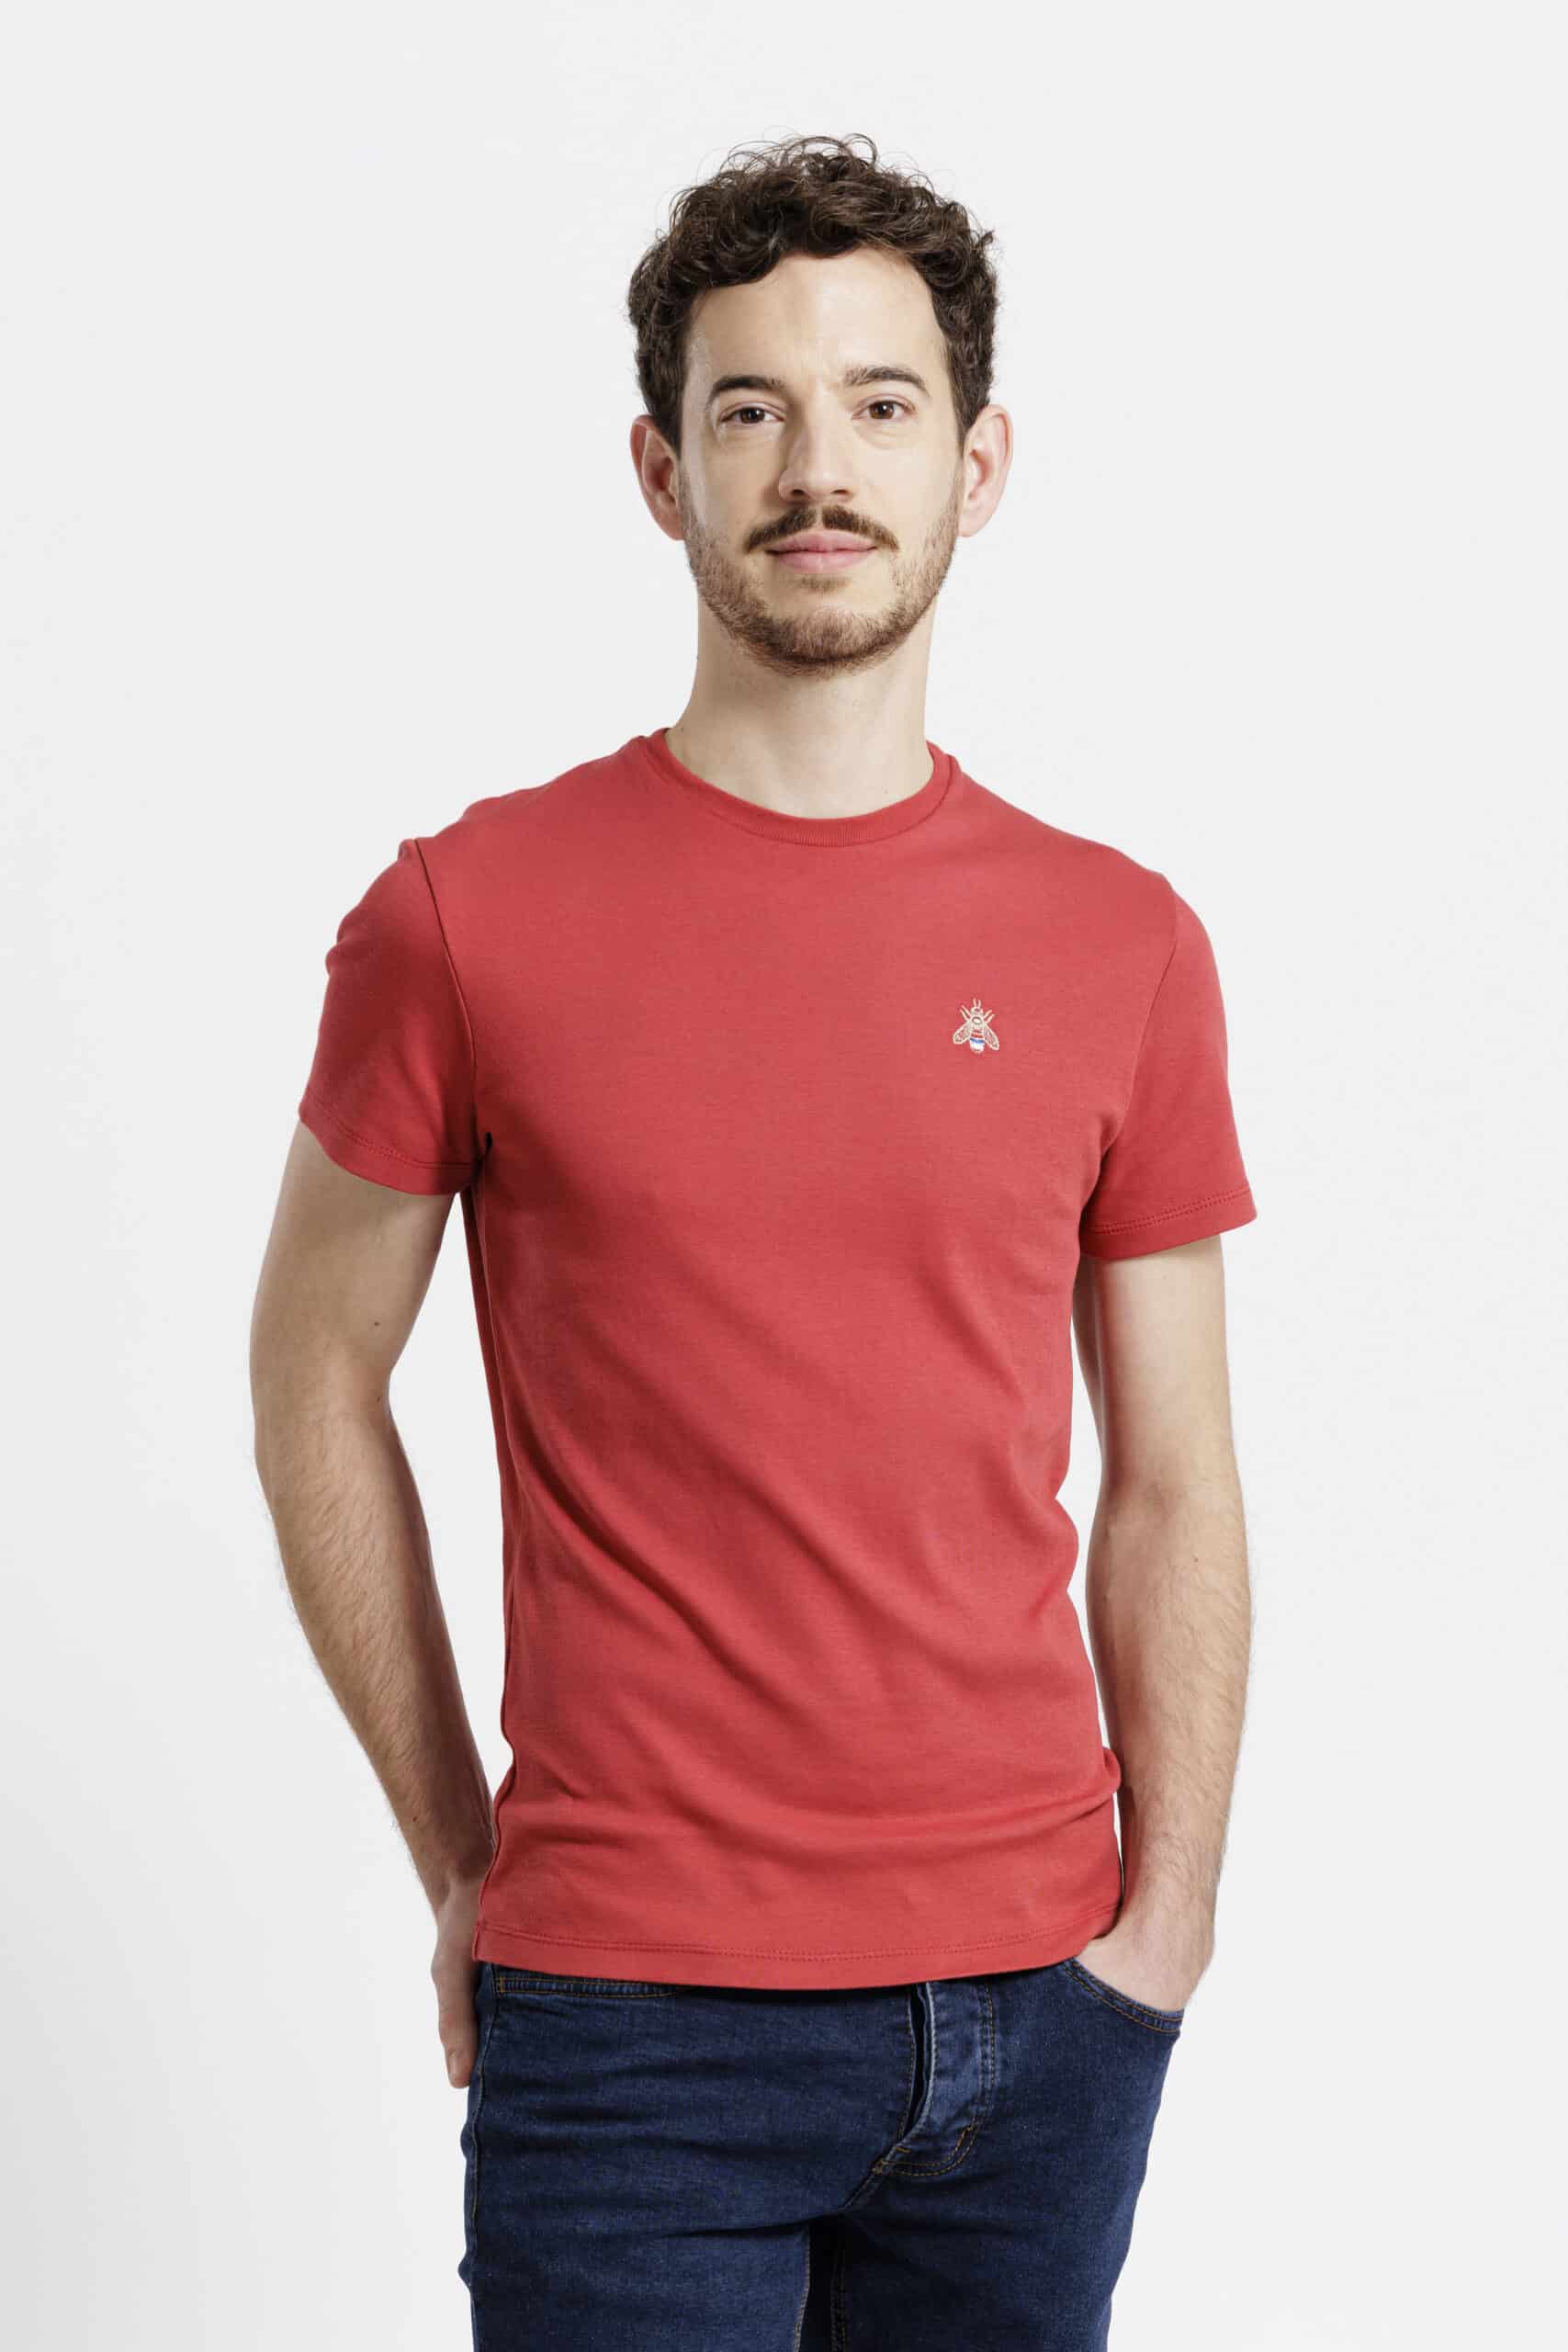 T-shirt homme face rouge nacarat